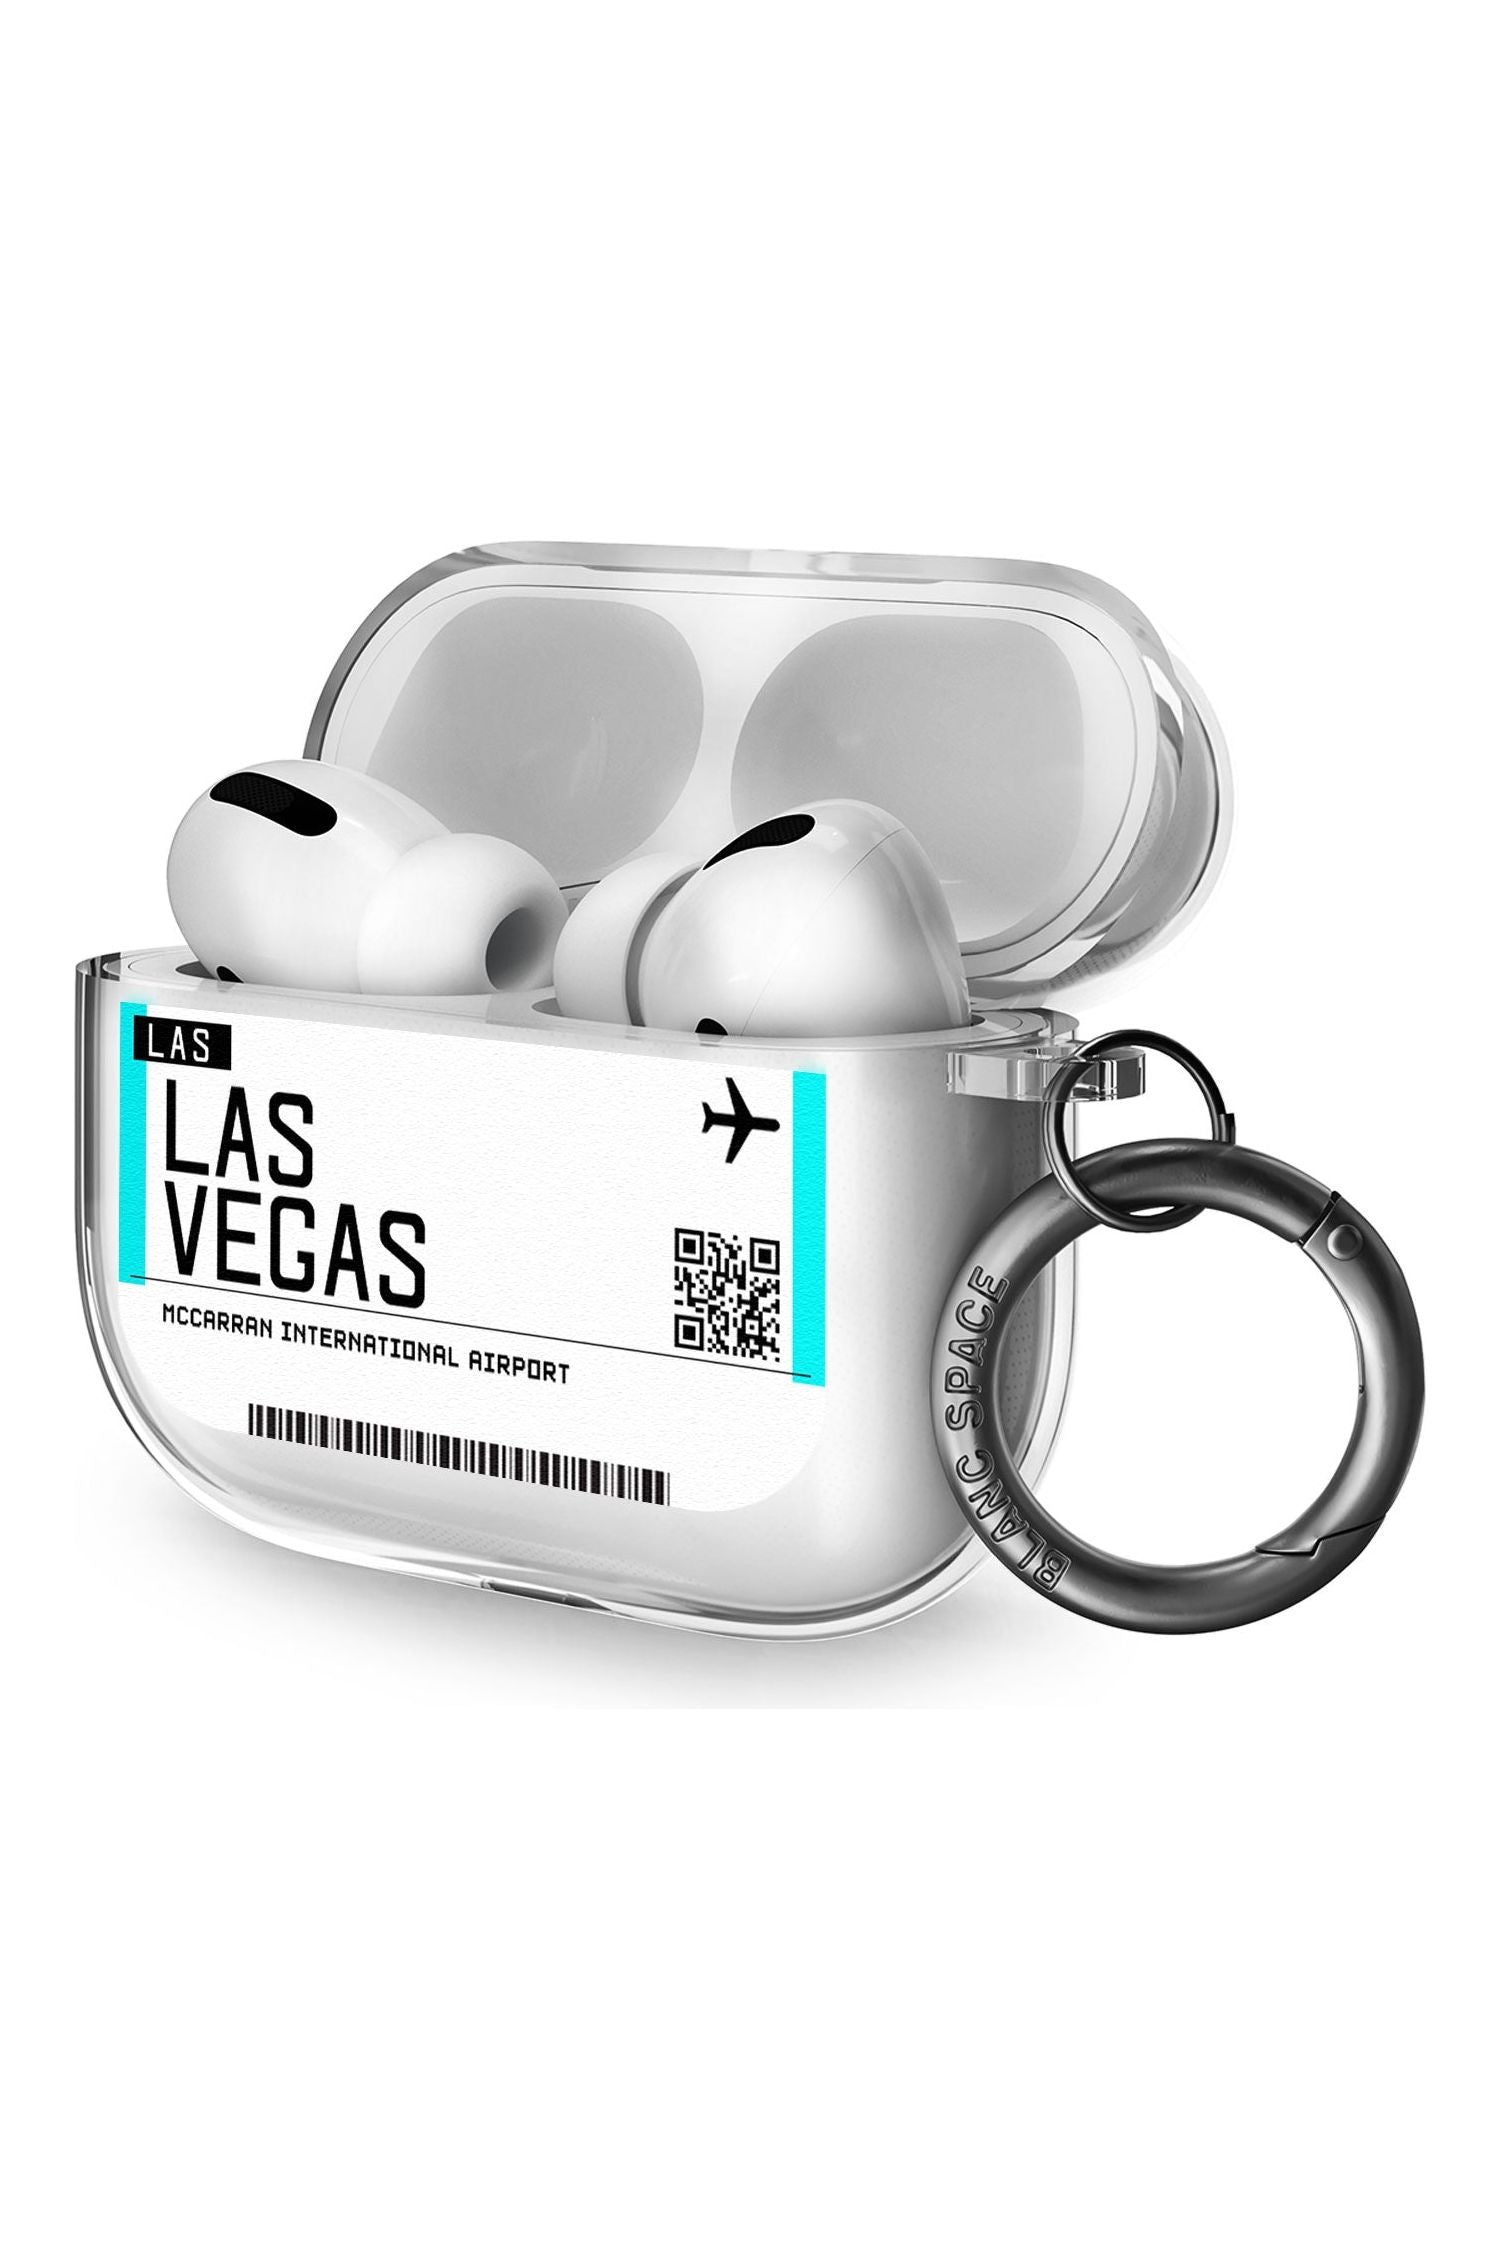 Las Vegas Boarding Pass Airpods Pro Case